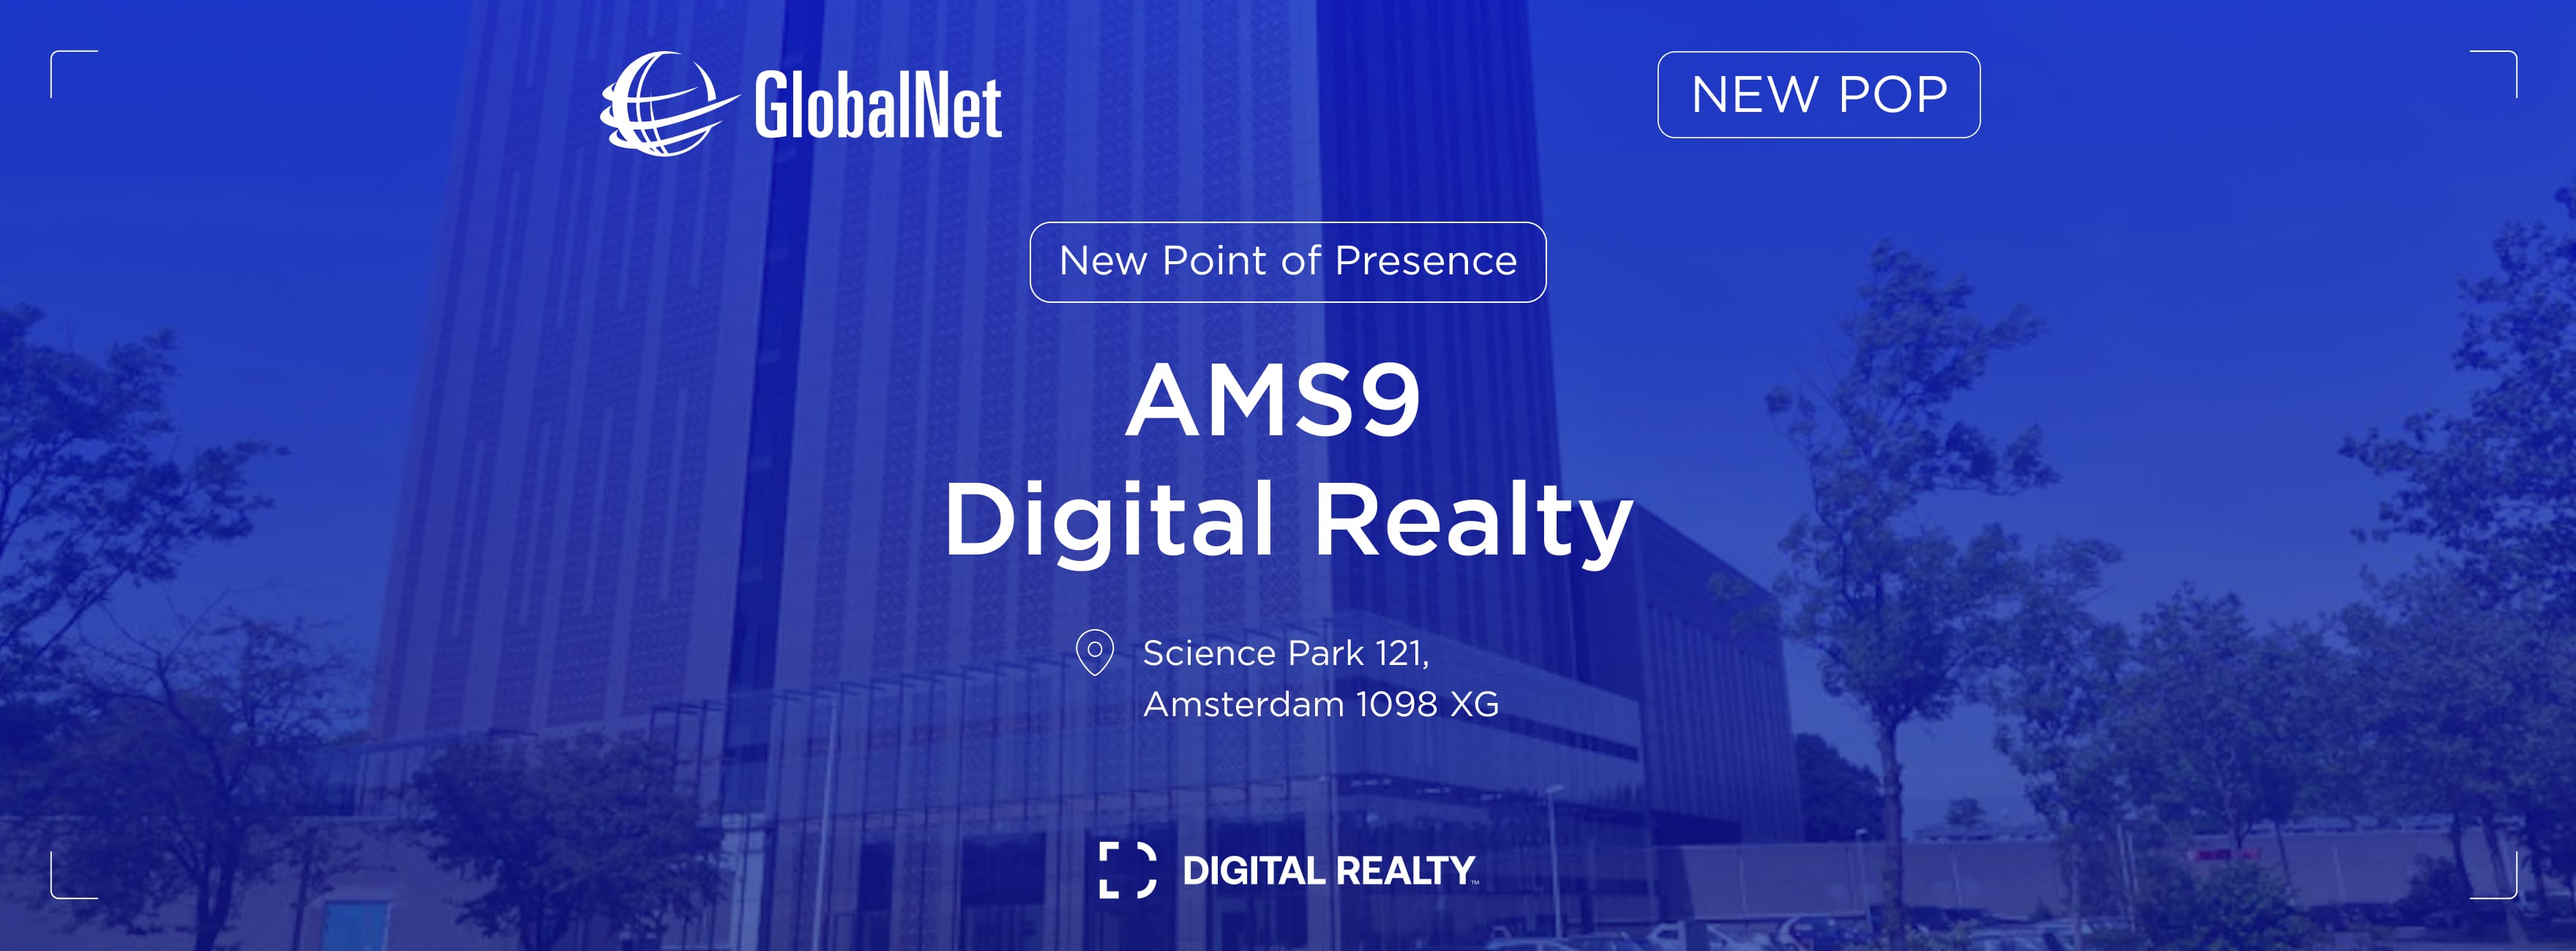 GlobalNet's new PoP in Digital Realty's AMS9